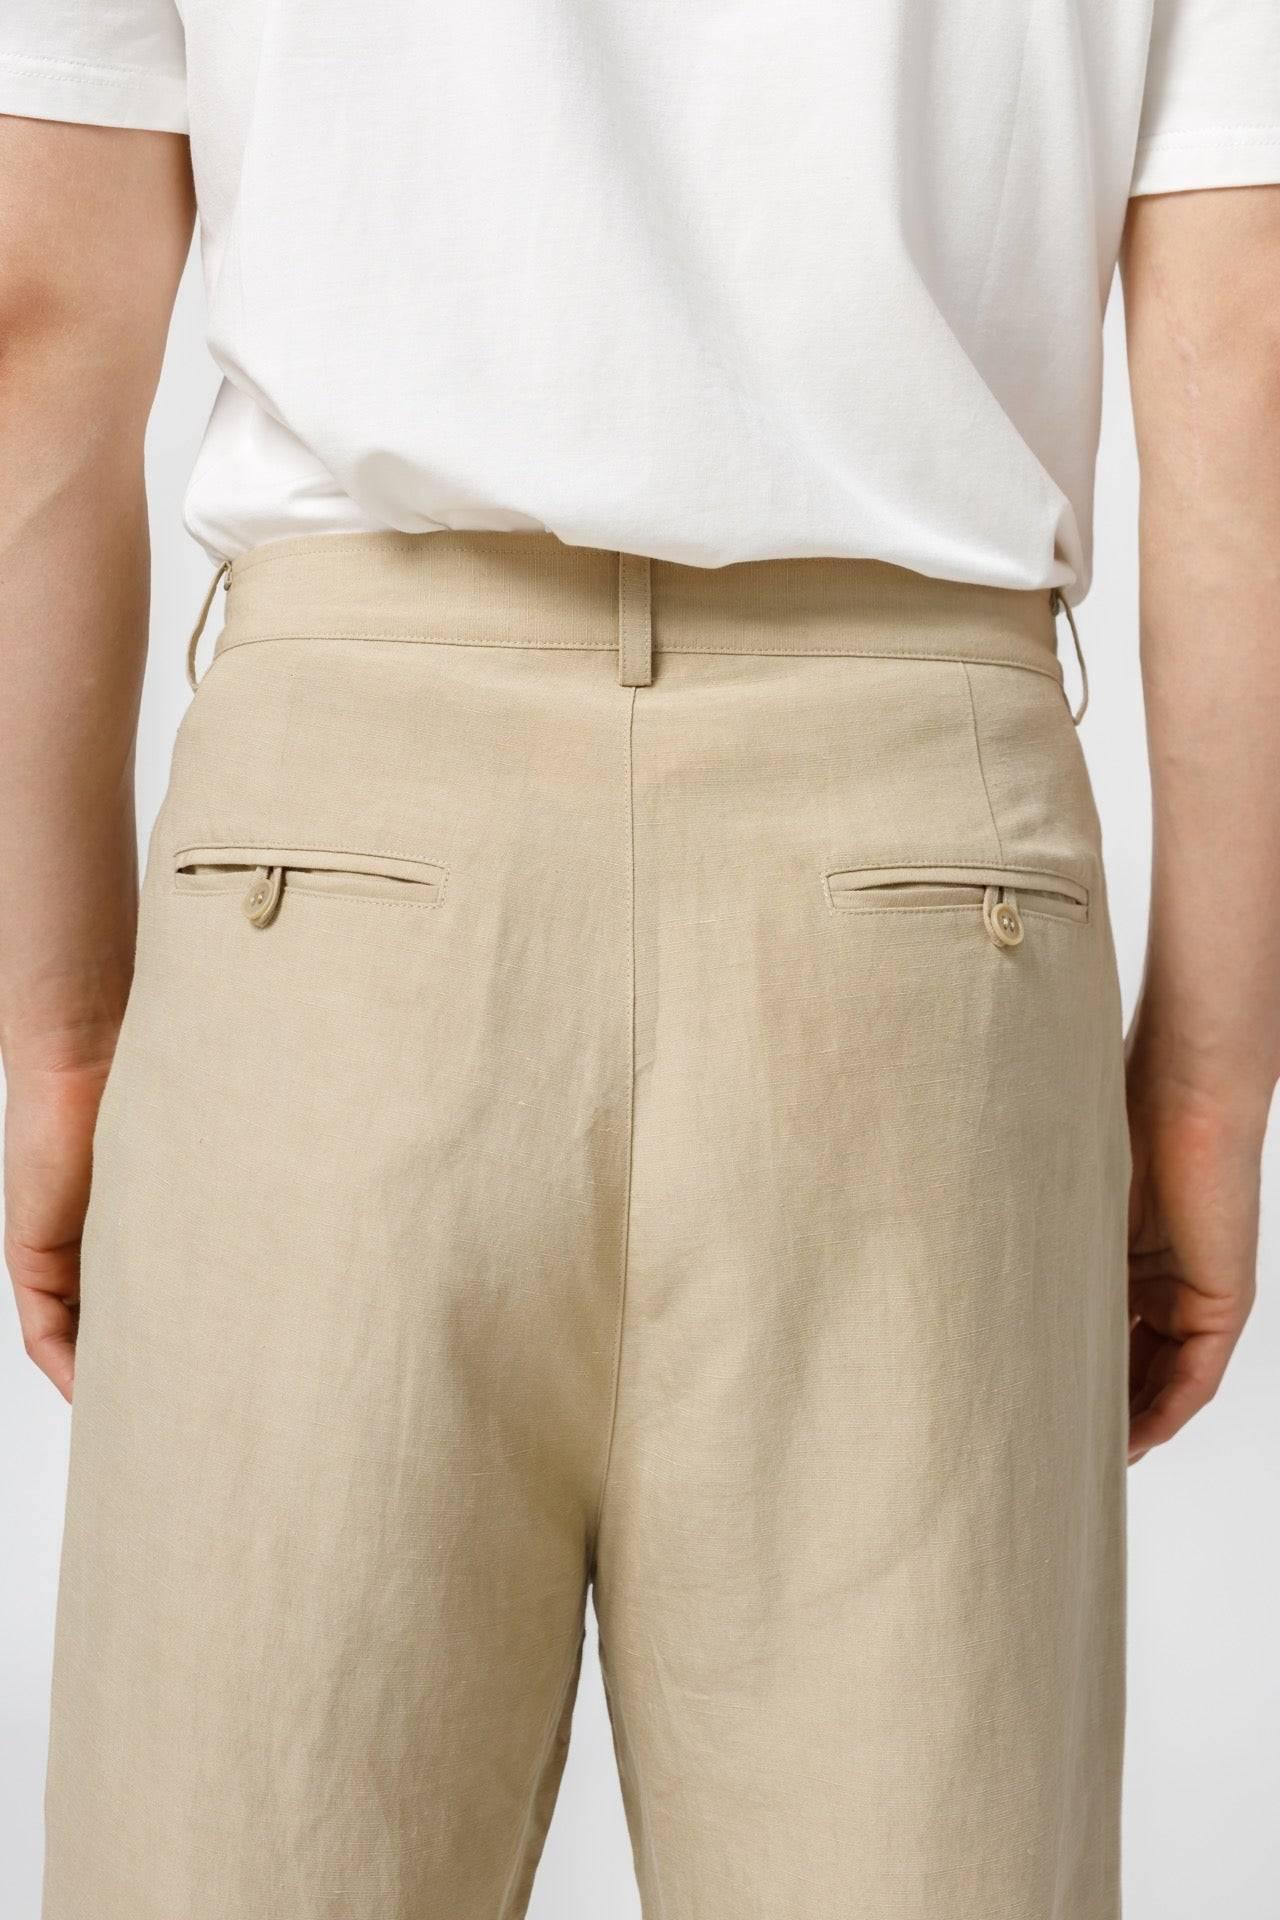 Men's Relaxed-Fit Linen Pants